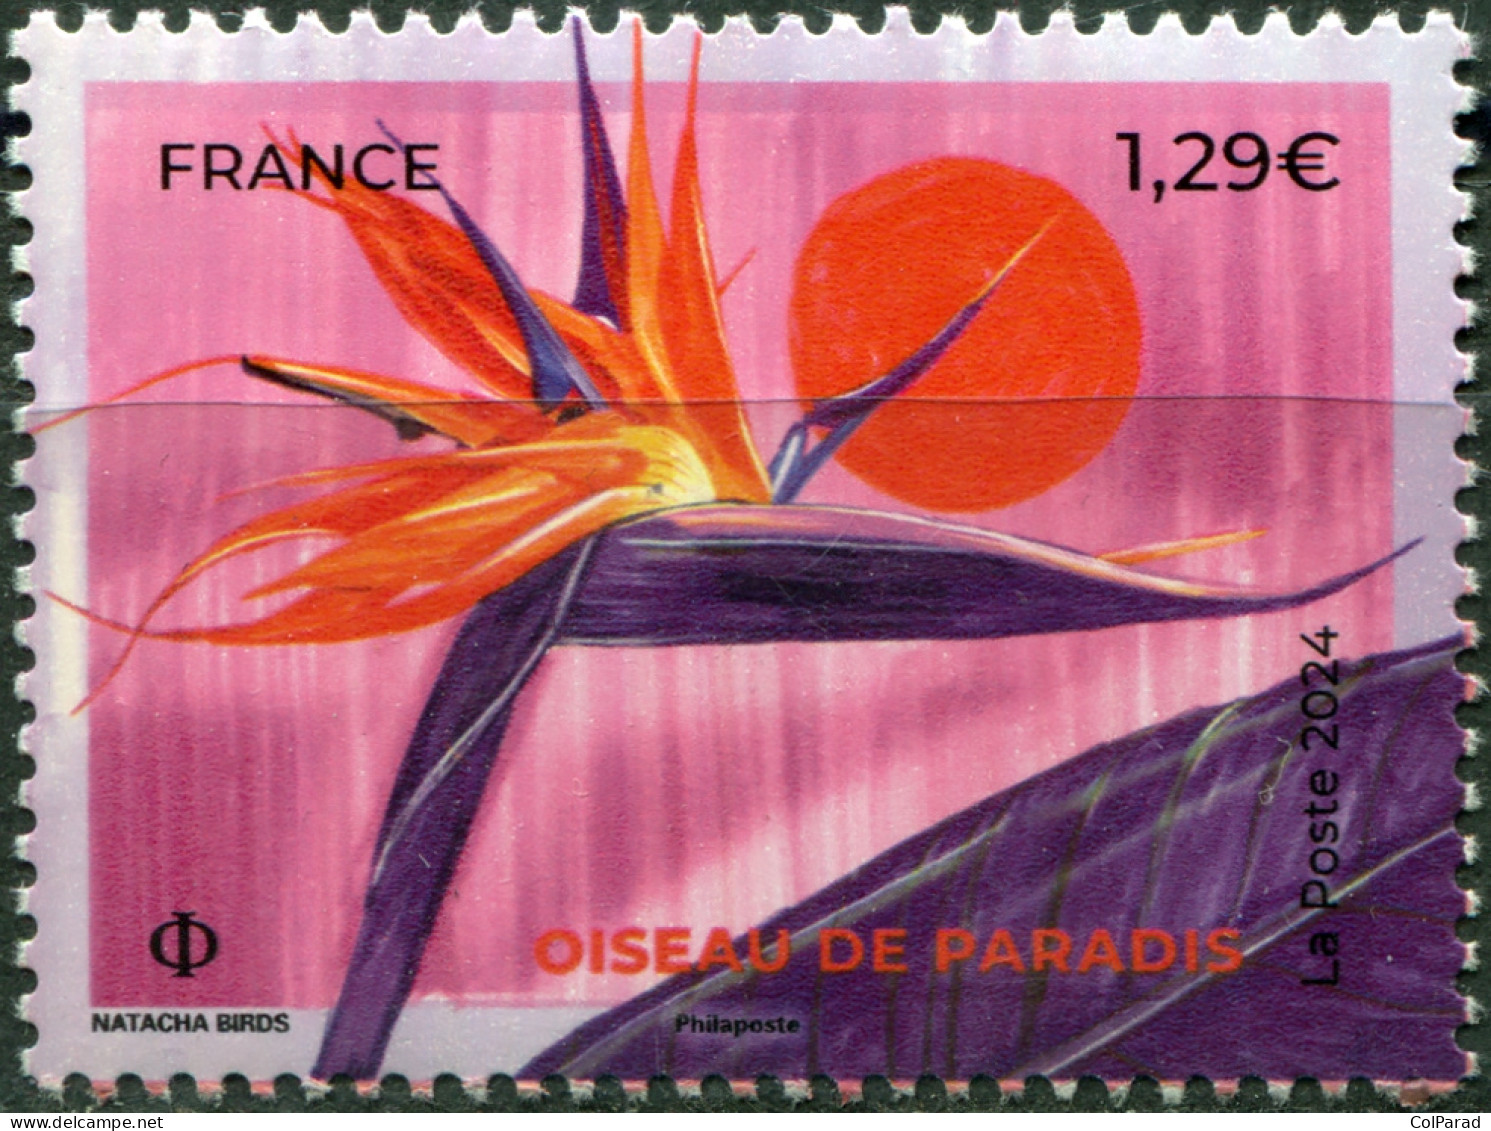 FRANCE - 2024 - STAMP MNH ** - Bird Of Paradise (Strelitzia) - Unused Stamps